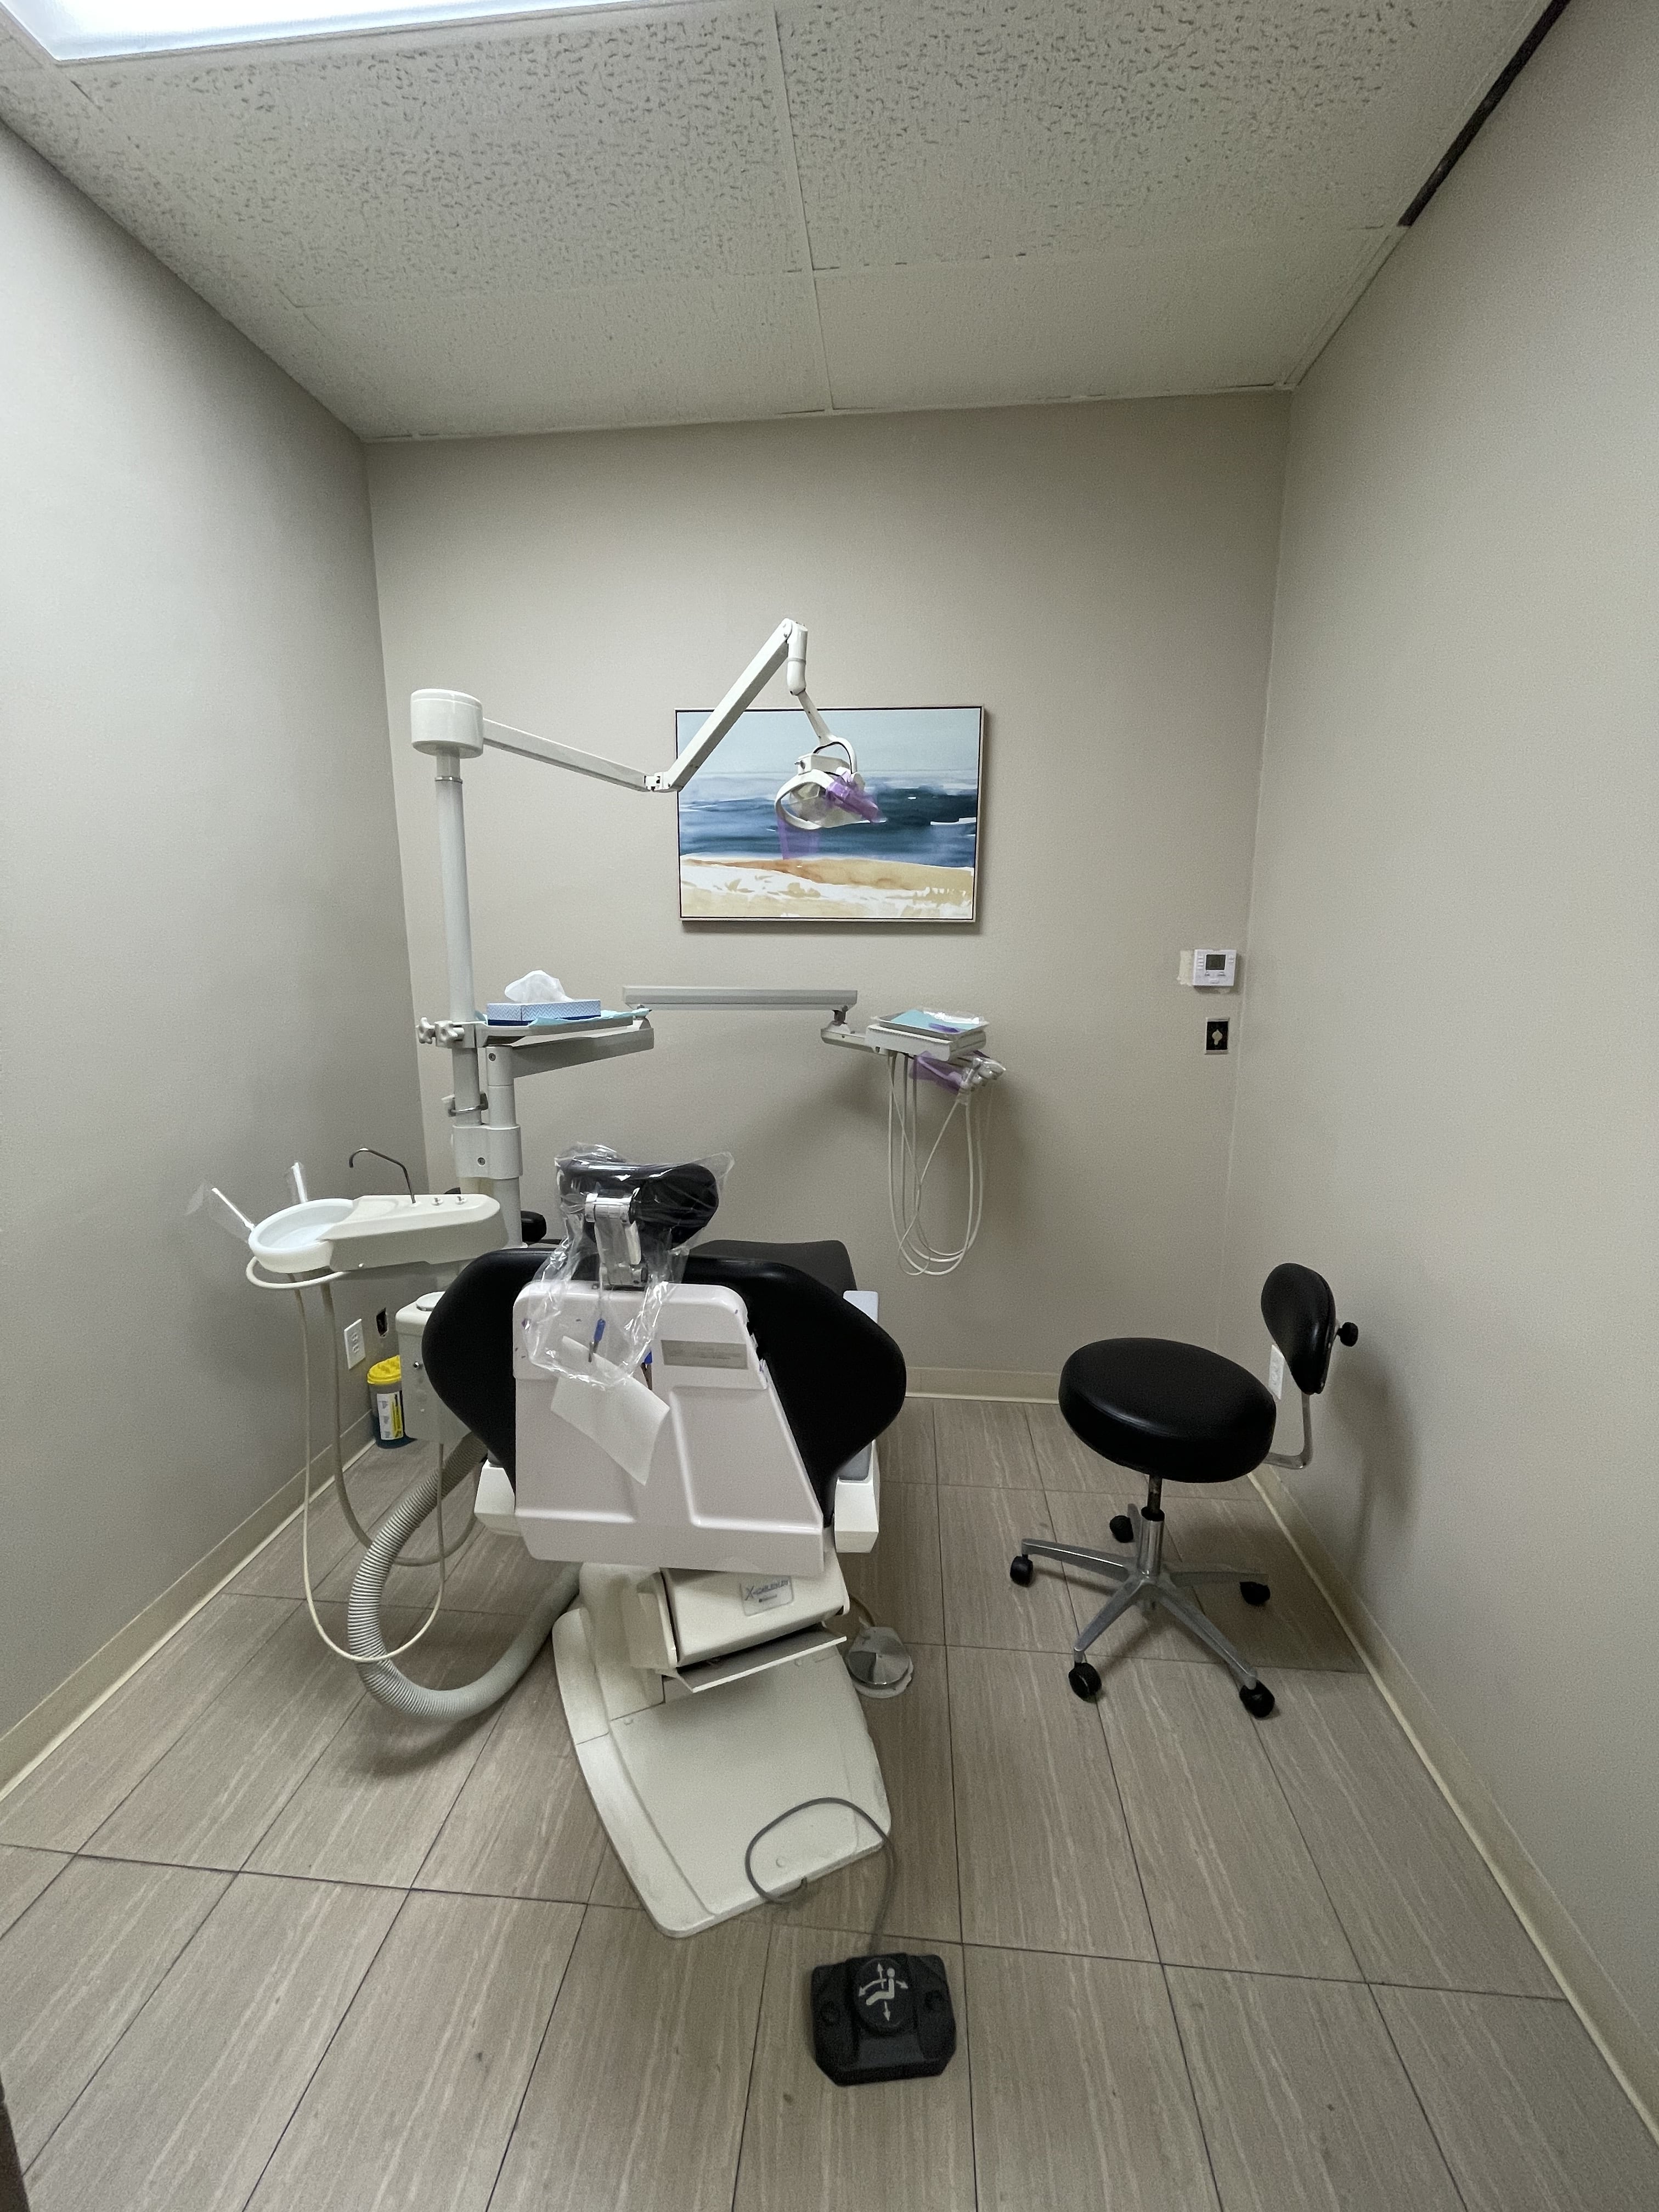 Dentist in Huntington Park CA